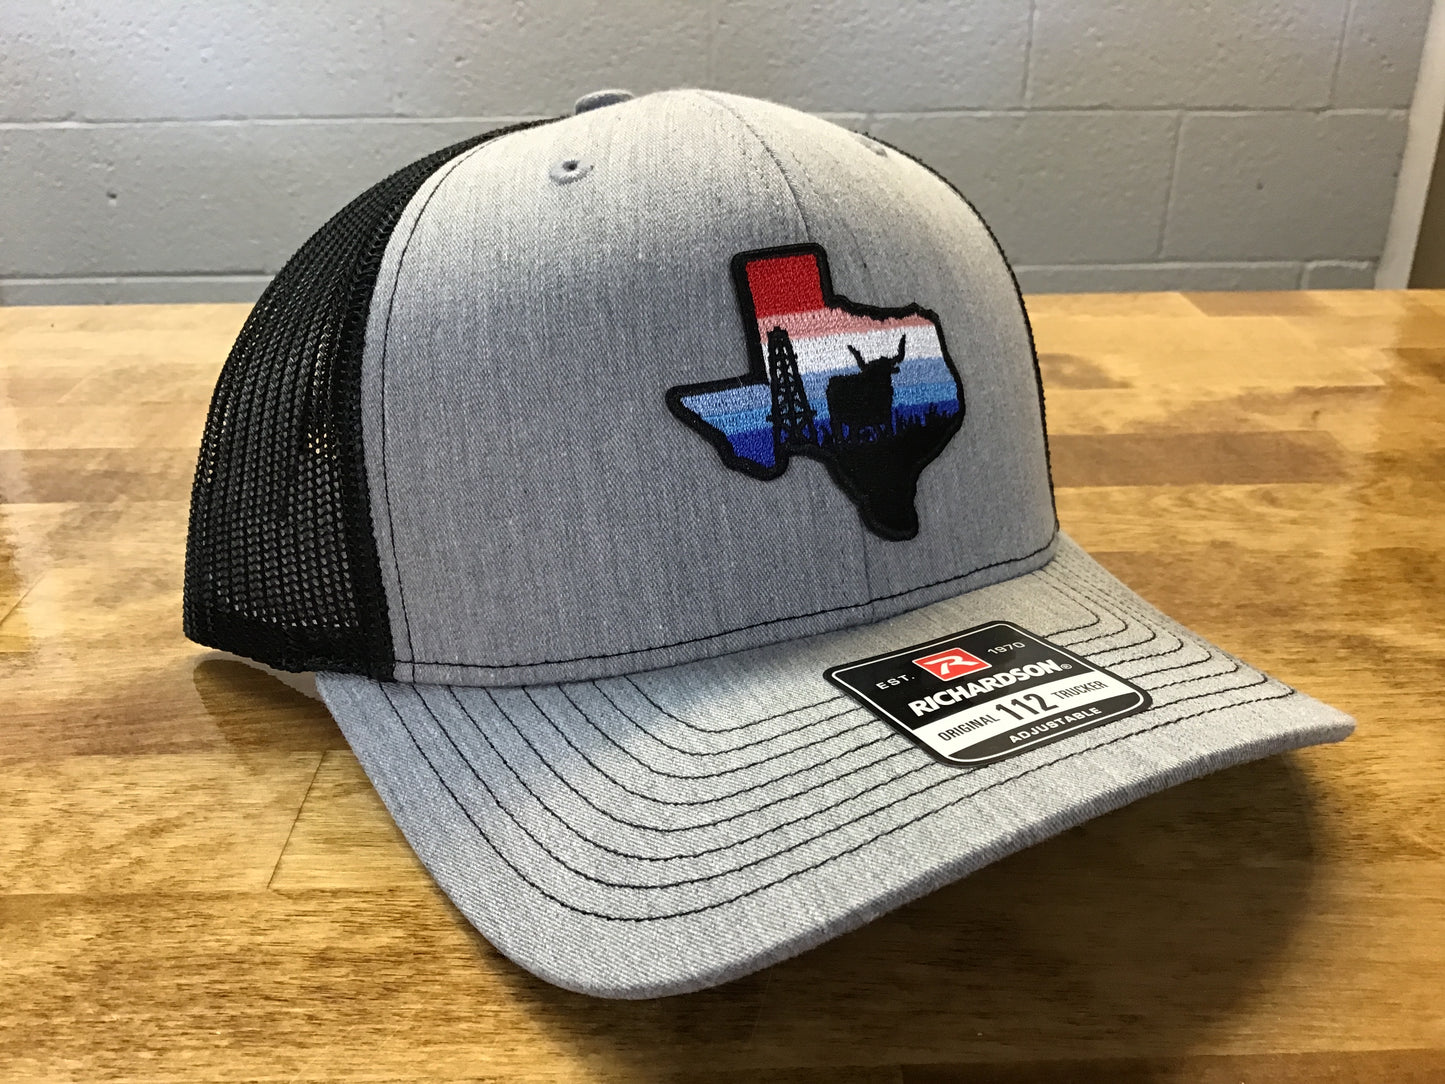 Texas Patch Cap